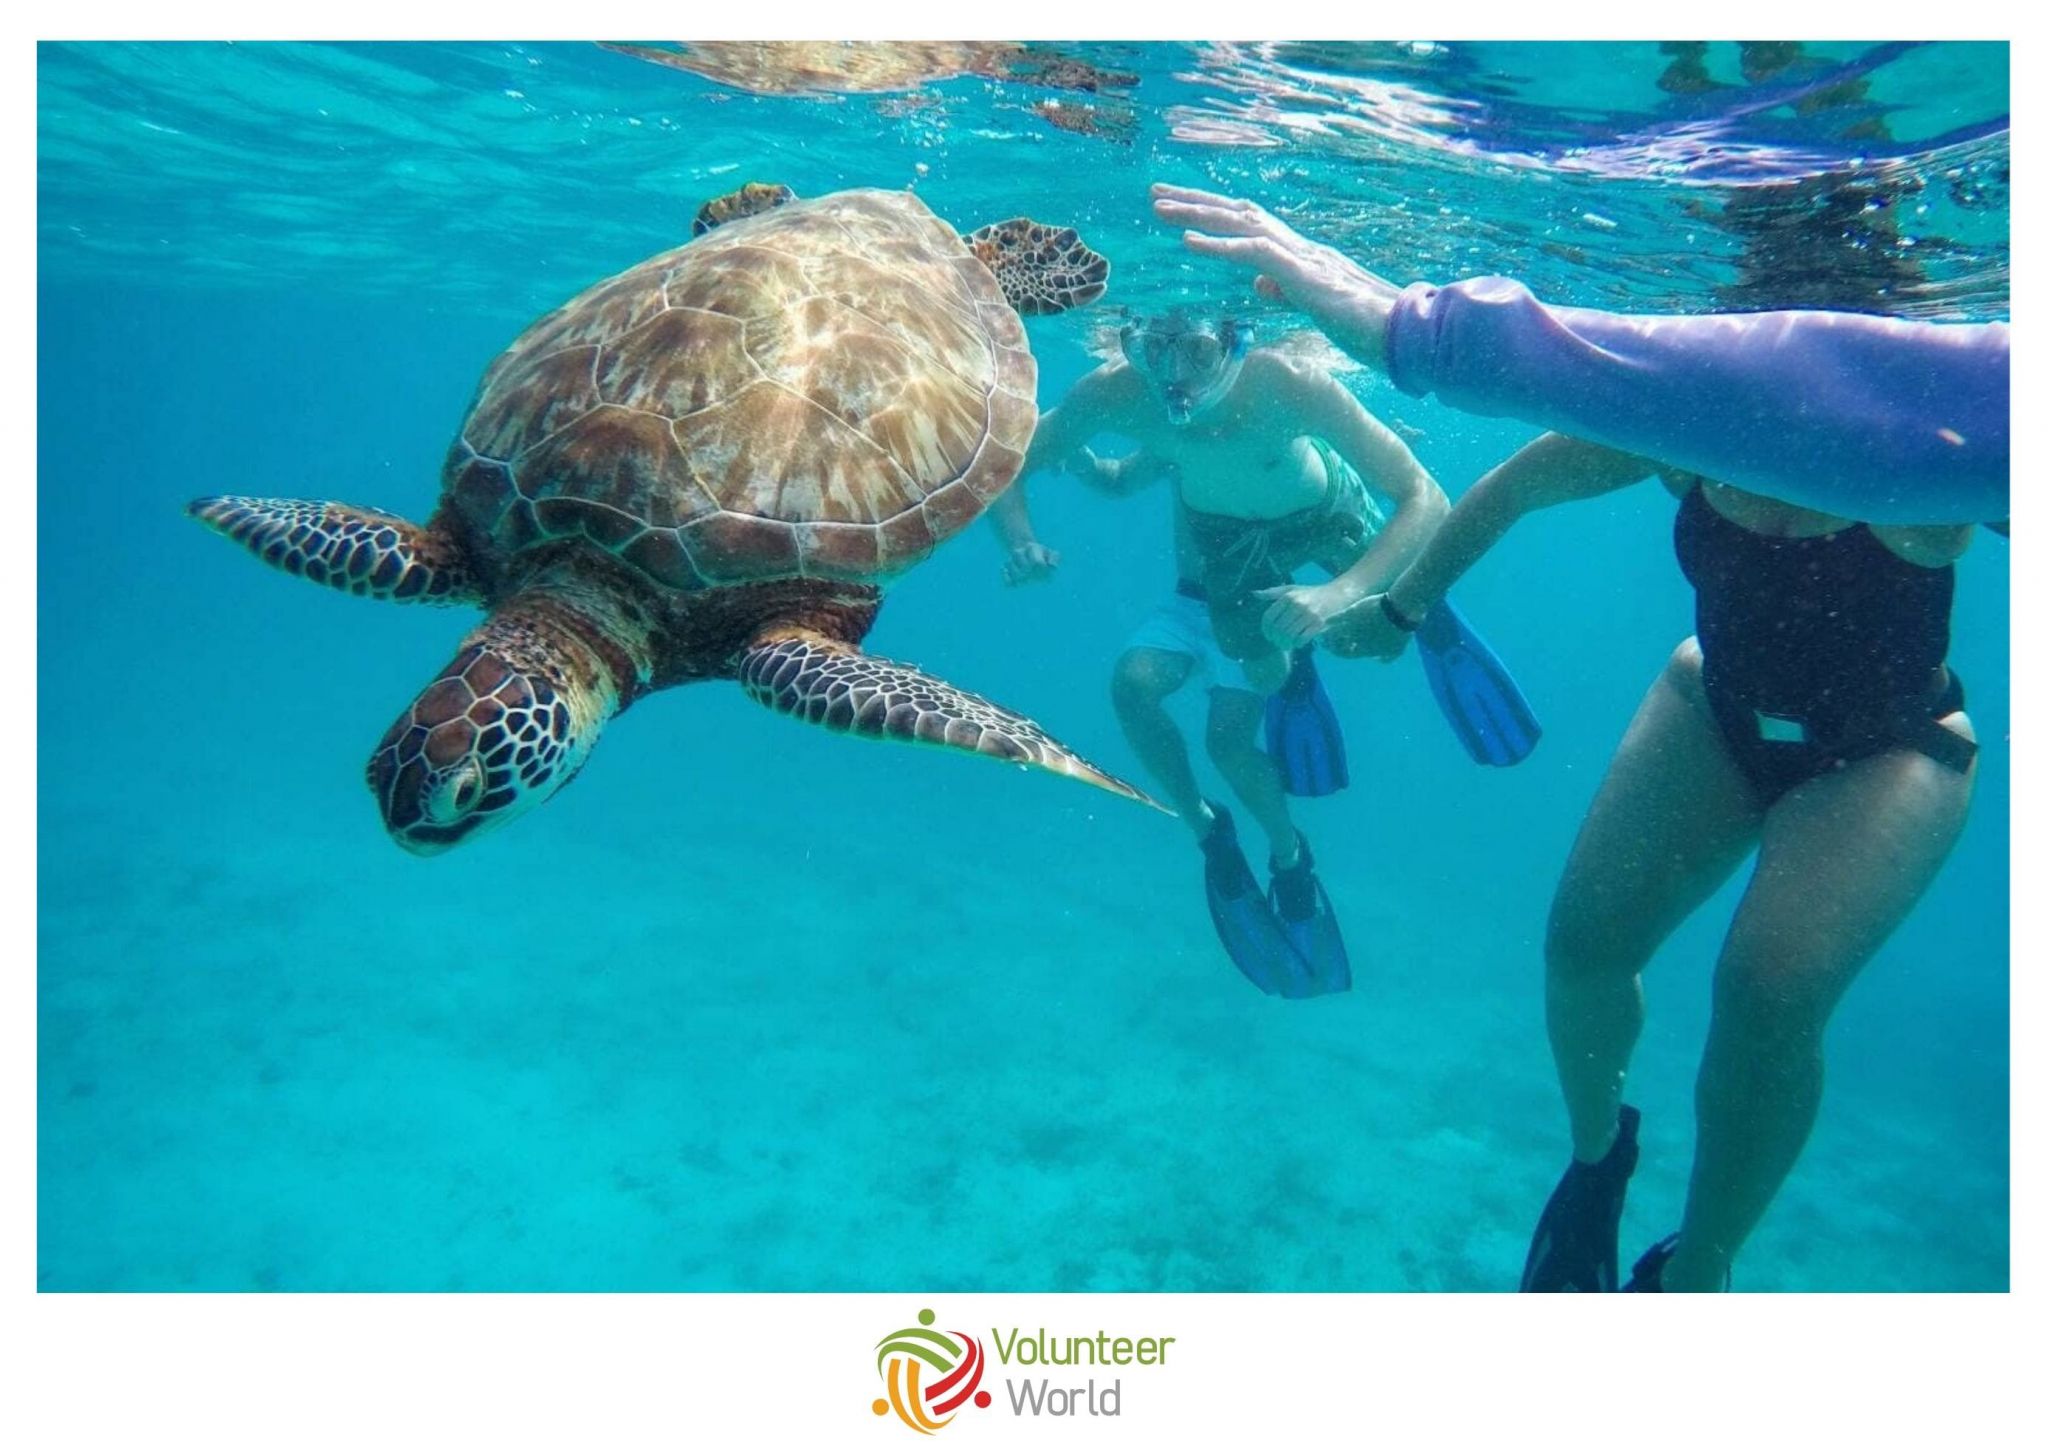 Volunteer with Sea Turtles in Belize